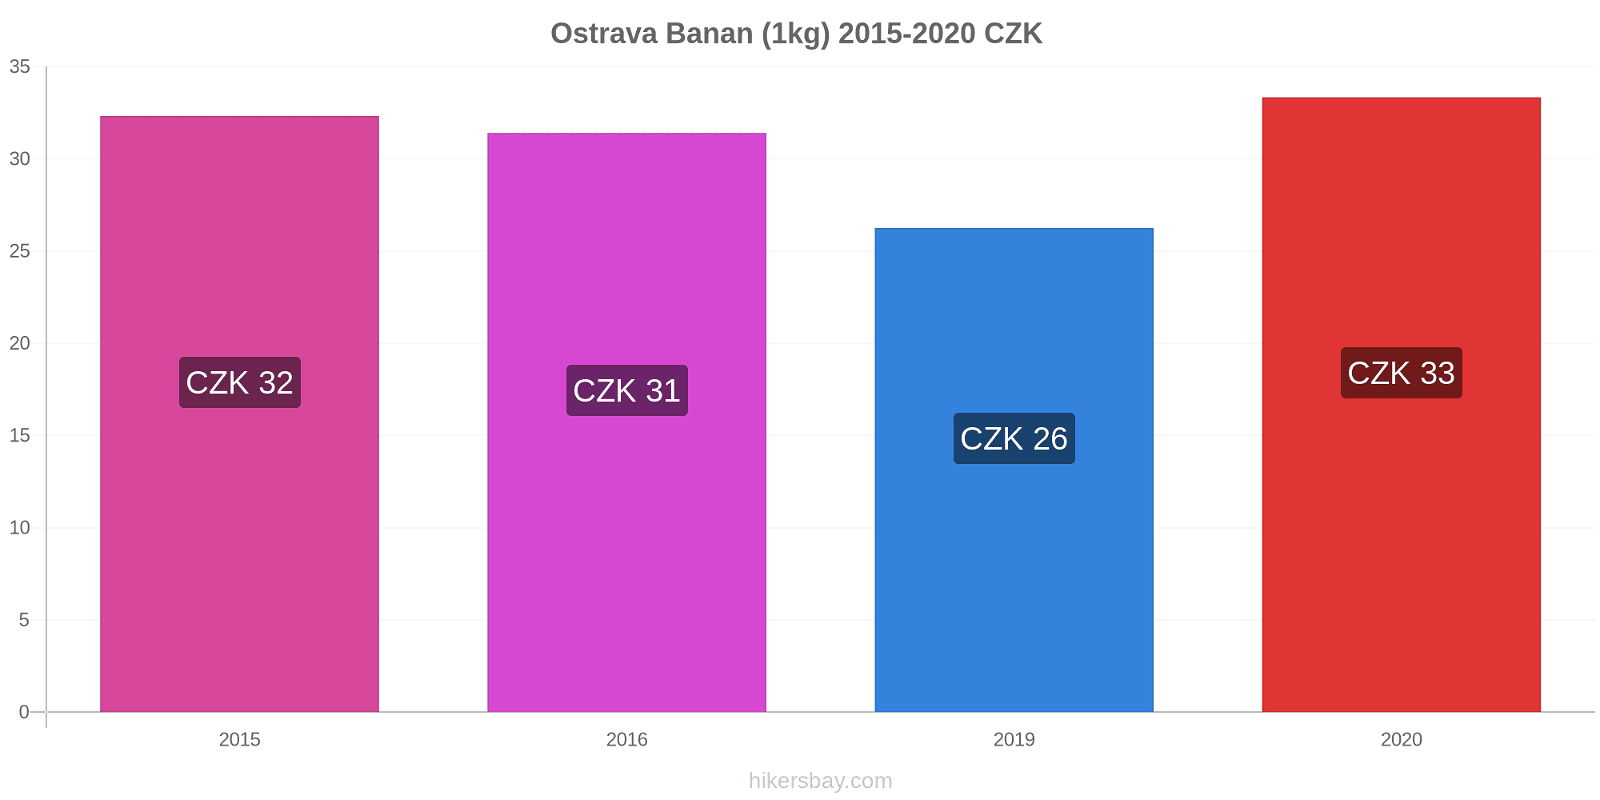 Ostrava prisendringer Banan (1kg) hikersbay.com